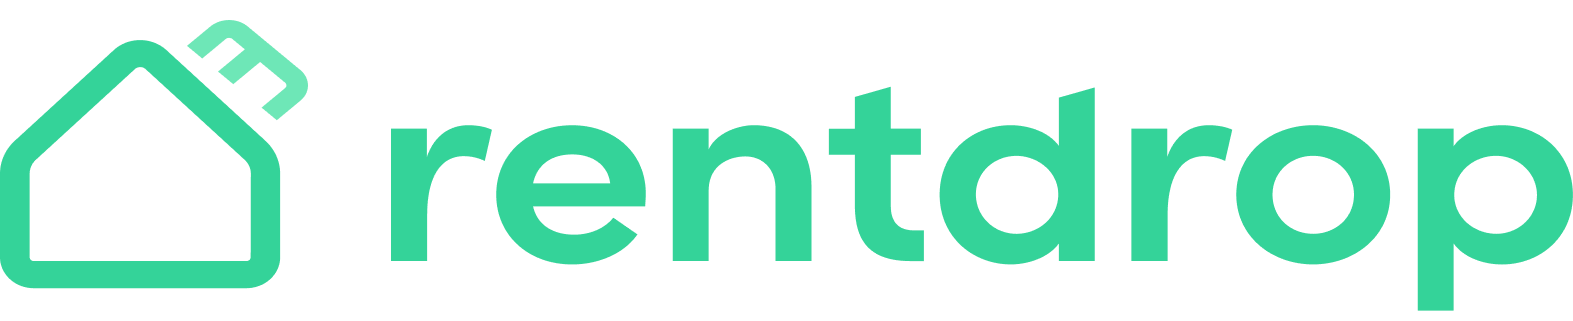 RentDrop Name - Green